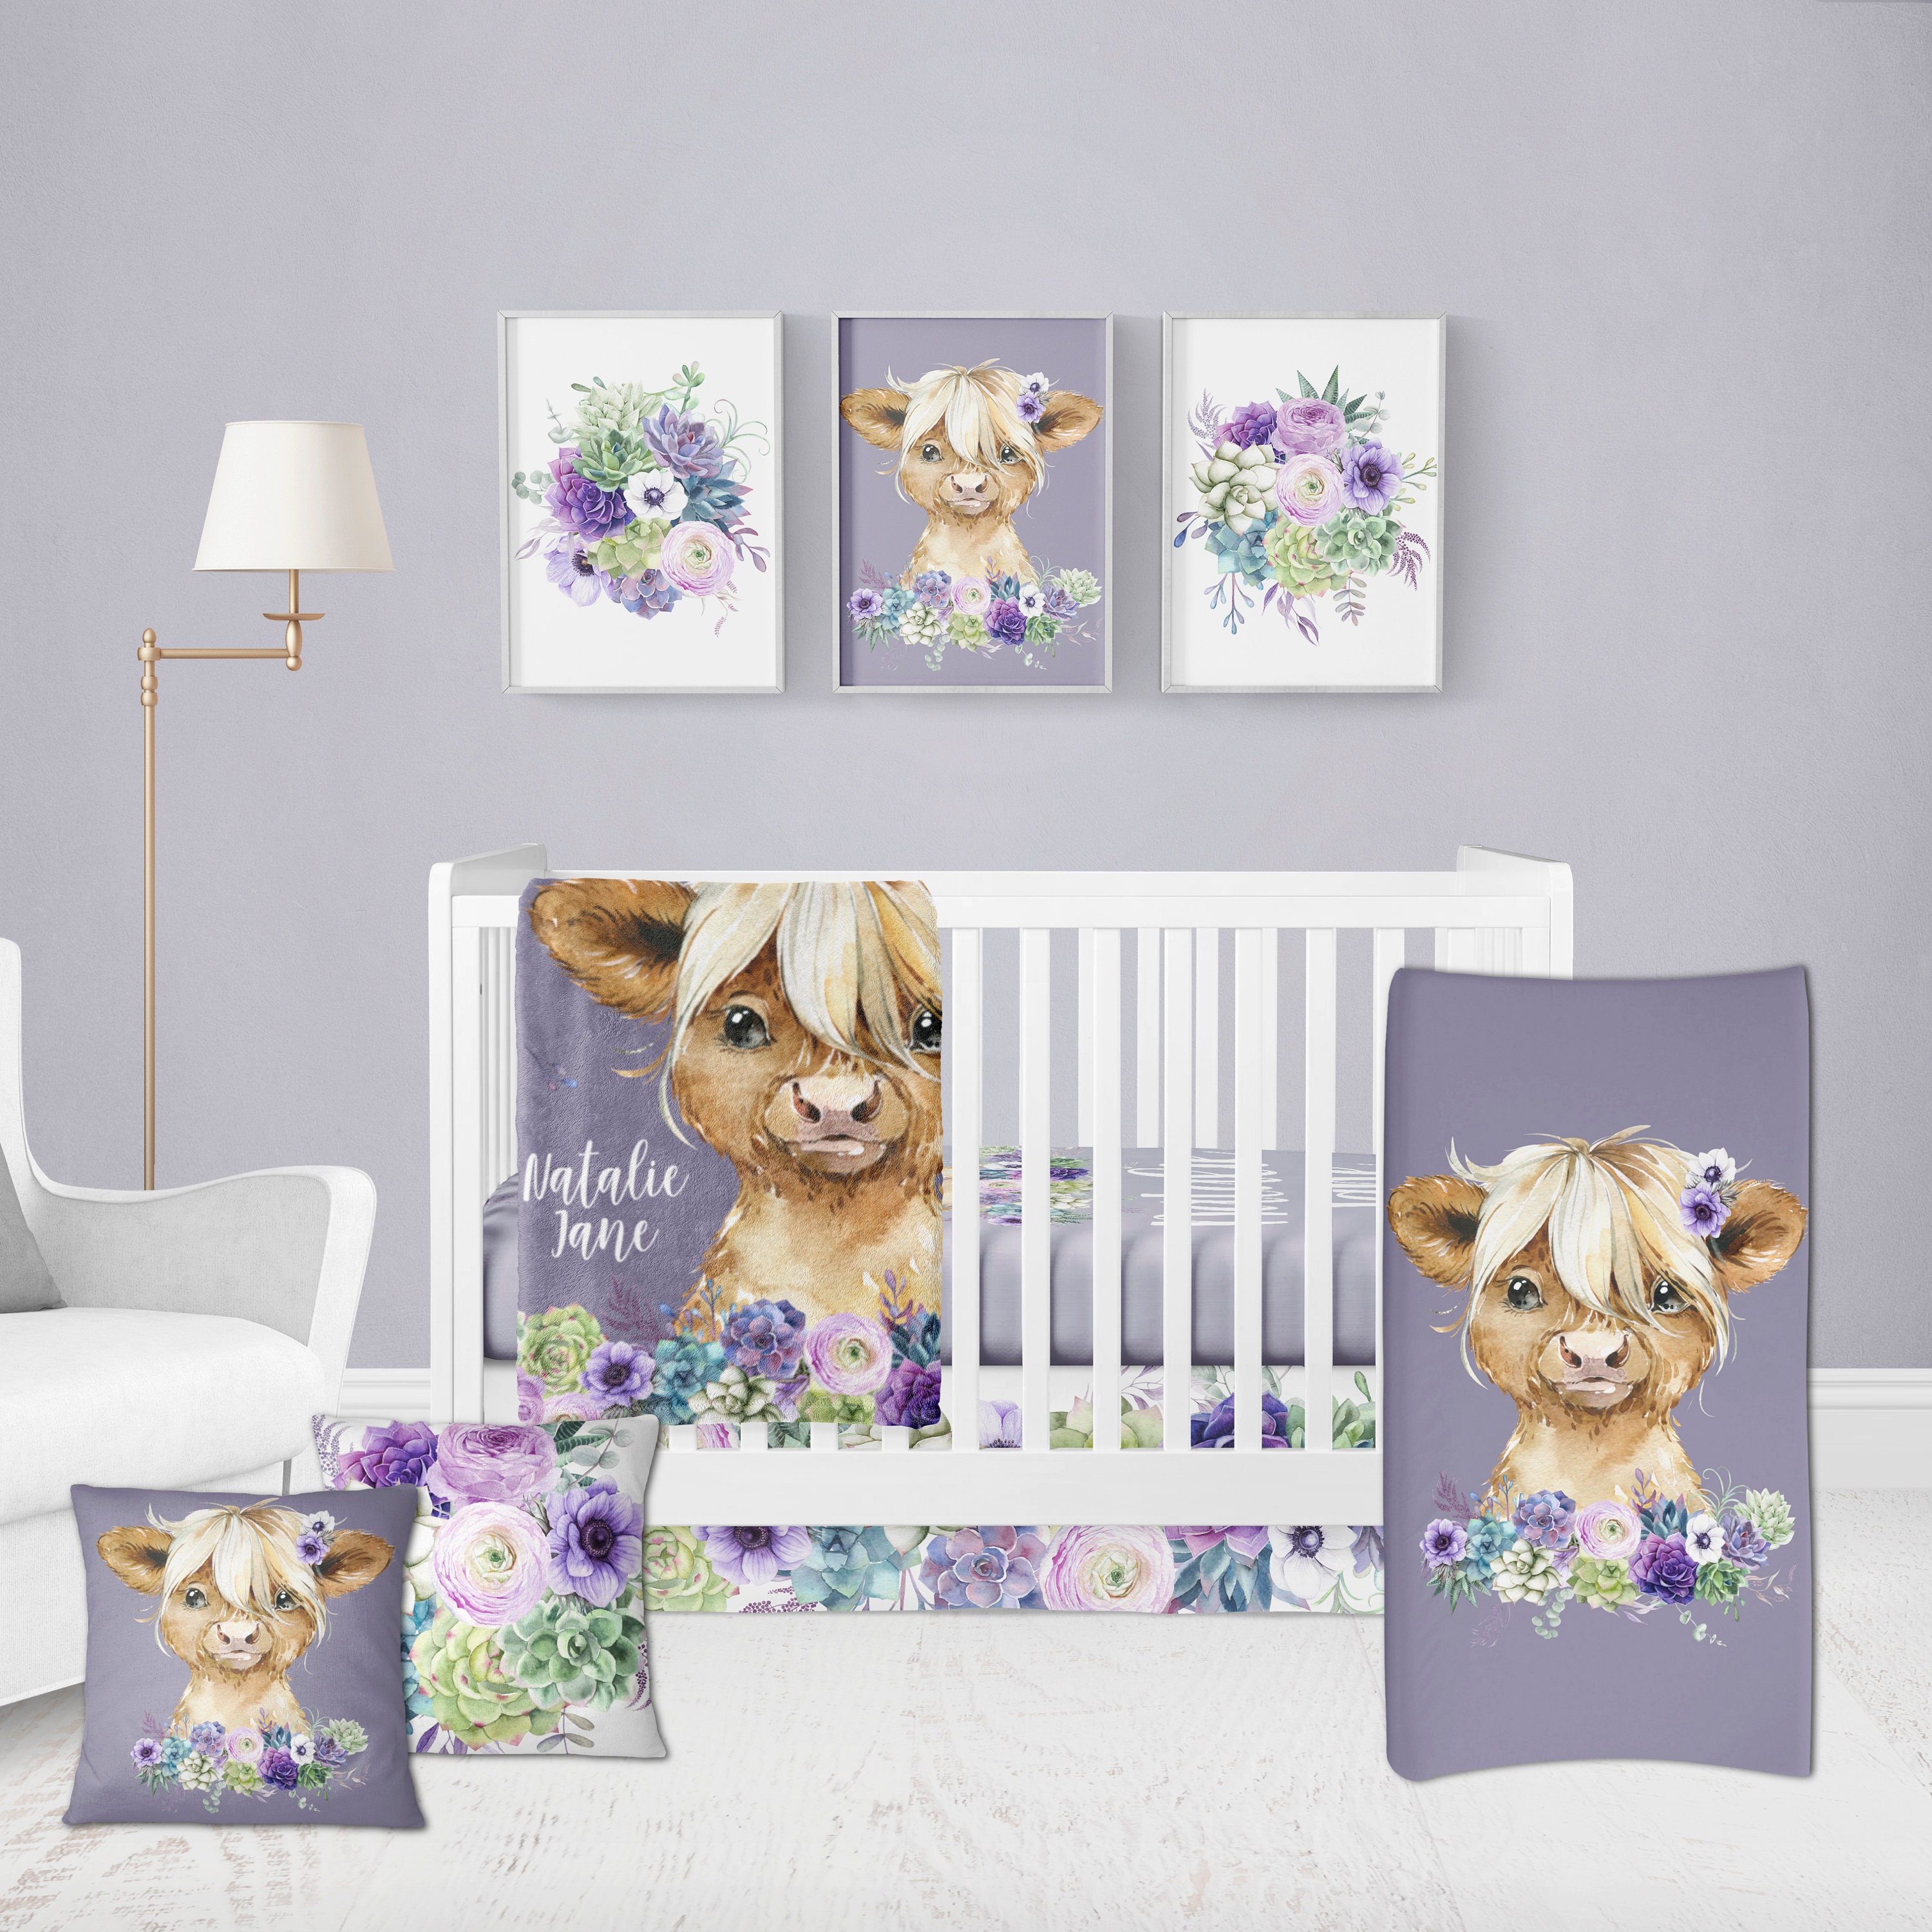 Snuggle Blanket: Pastel Purple Cow Print – Live Sweet Shop